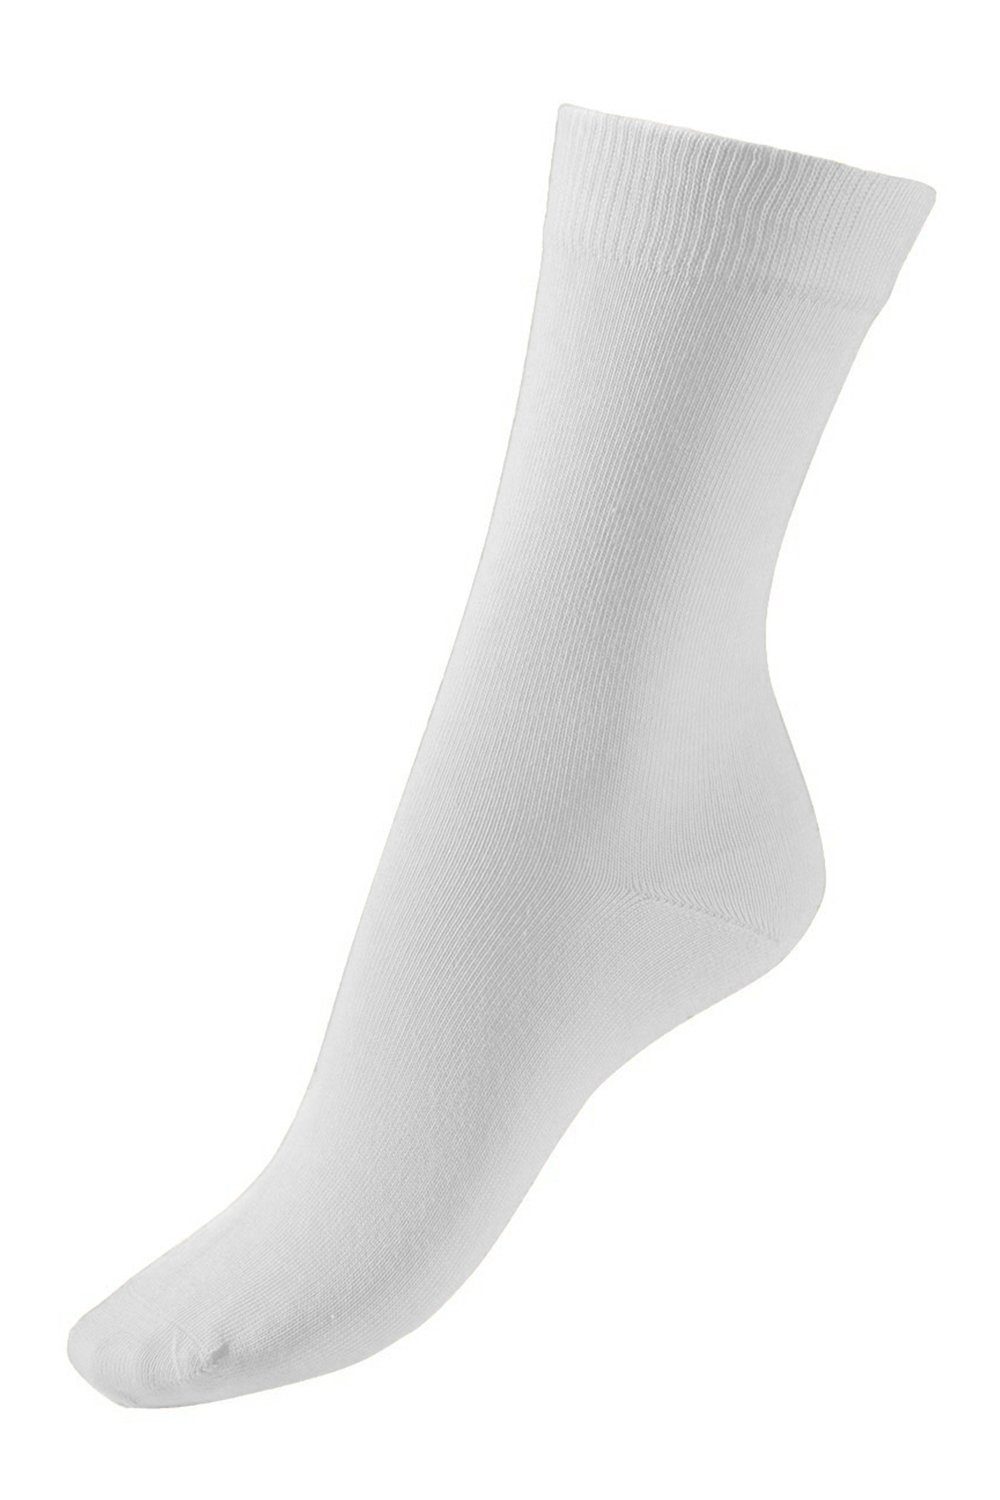 COMPRESSANA Socken Gesundheits-Socken GoWell MED Soft, 2er-Pack 3010 (2er-Pack) weiß | Socken